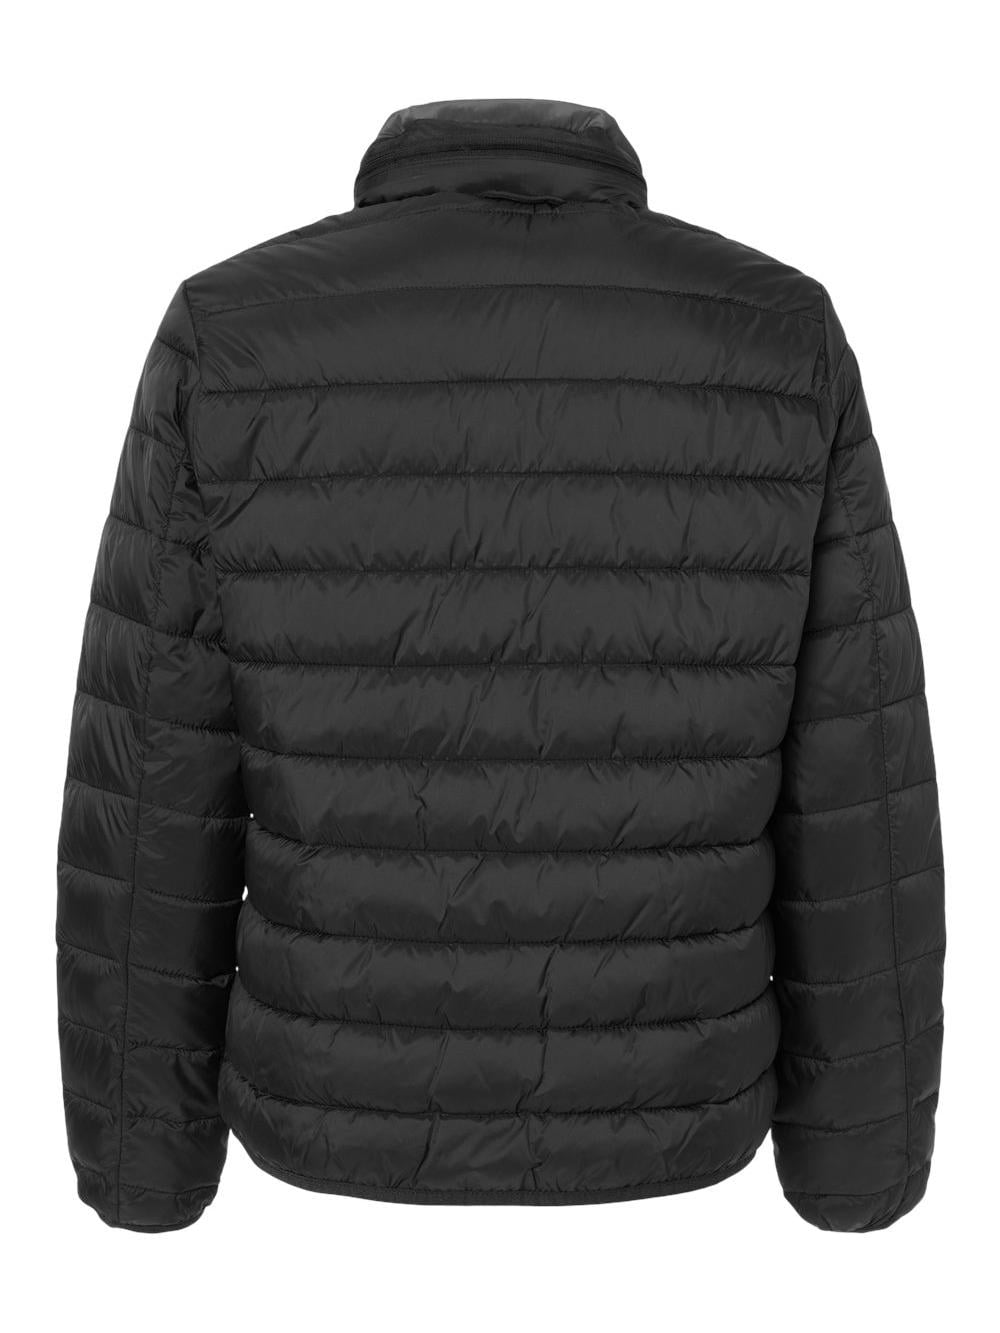 Weatherproof - Women's PillowPac Puffer Jacket - 211137 - Black - Size: XL  